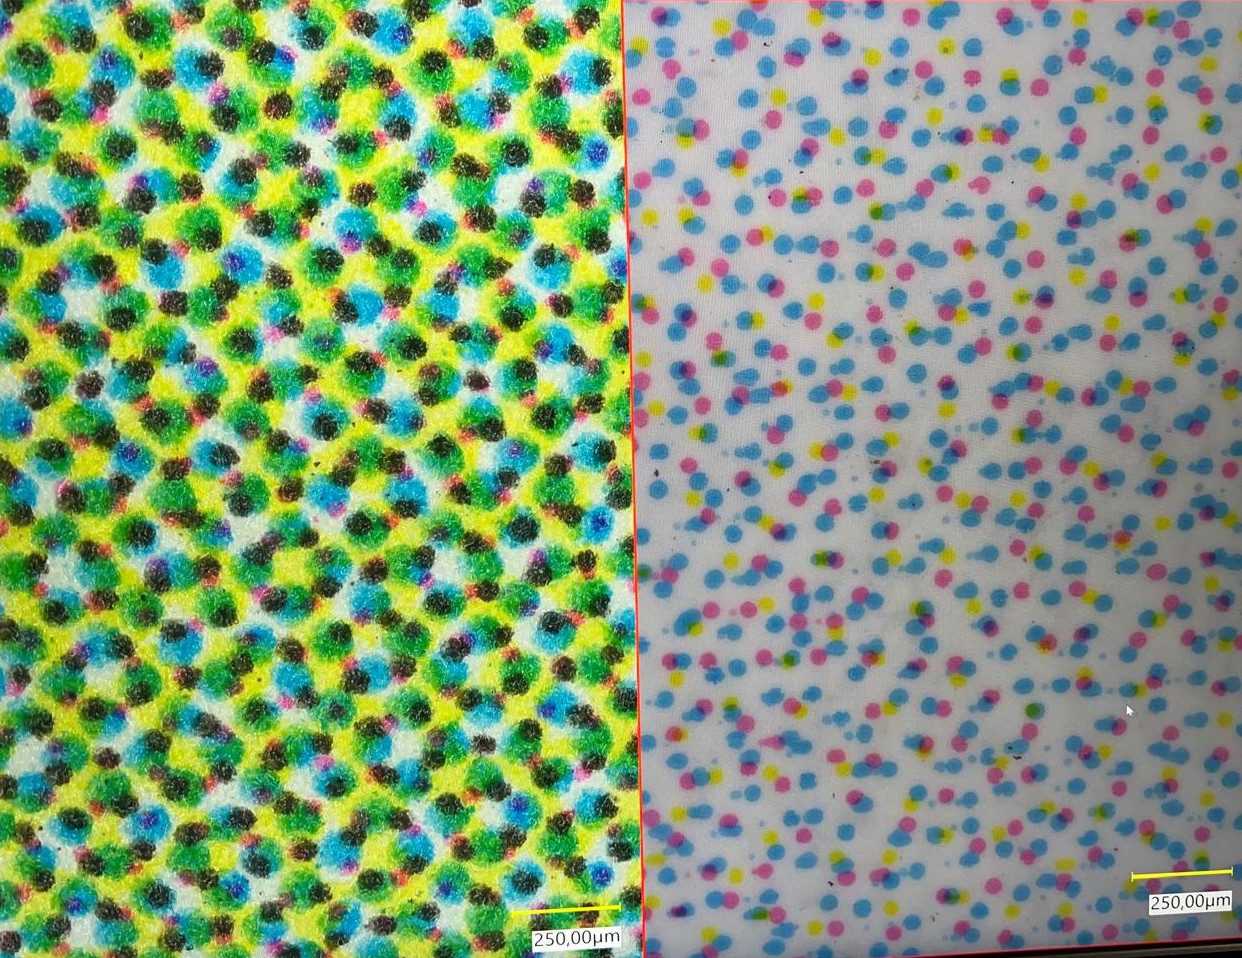 landa_confronto tra un retino offset e il punto nanoprint